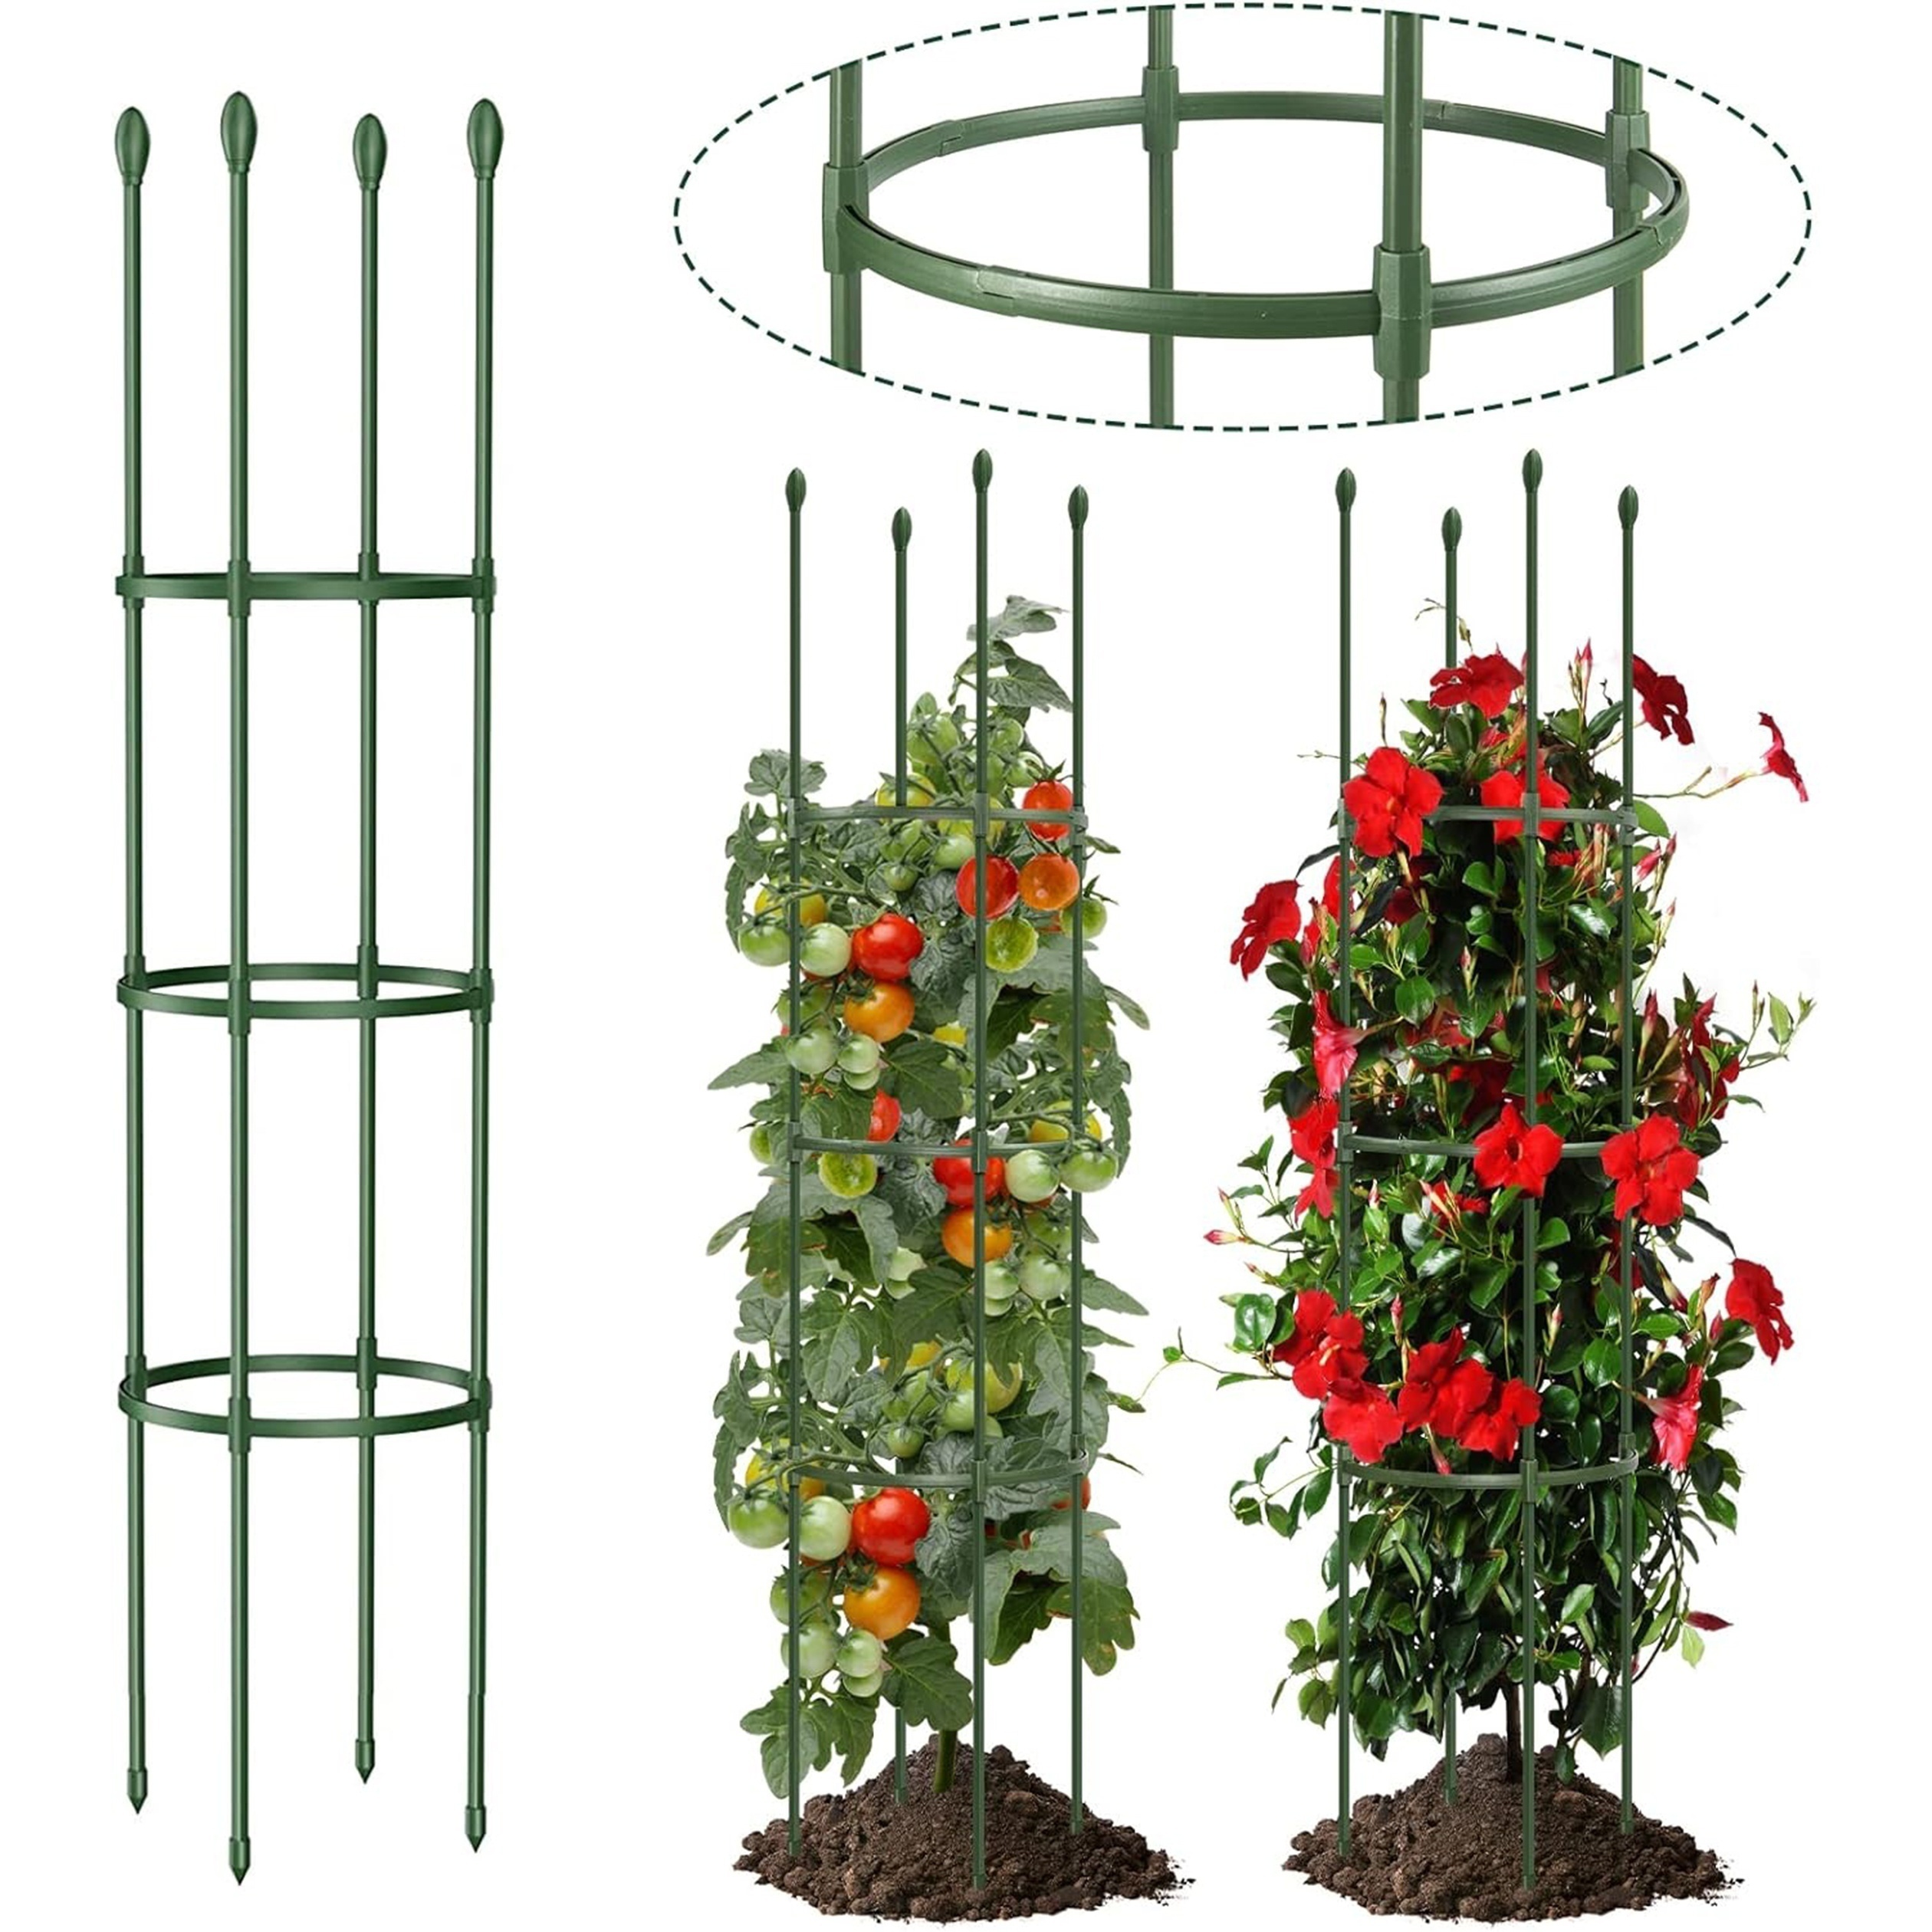 

Versatile Garden Trellis Set For Climbing Plants - Durable Plastic Nursery Beds, Plant Support Poles & Cage For Vines, Roses & More